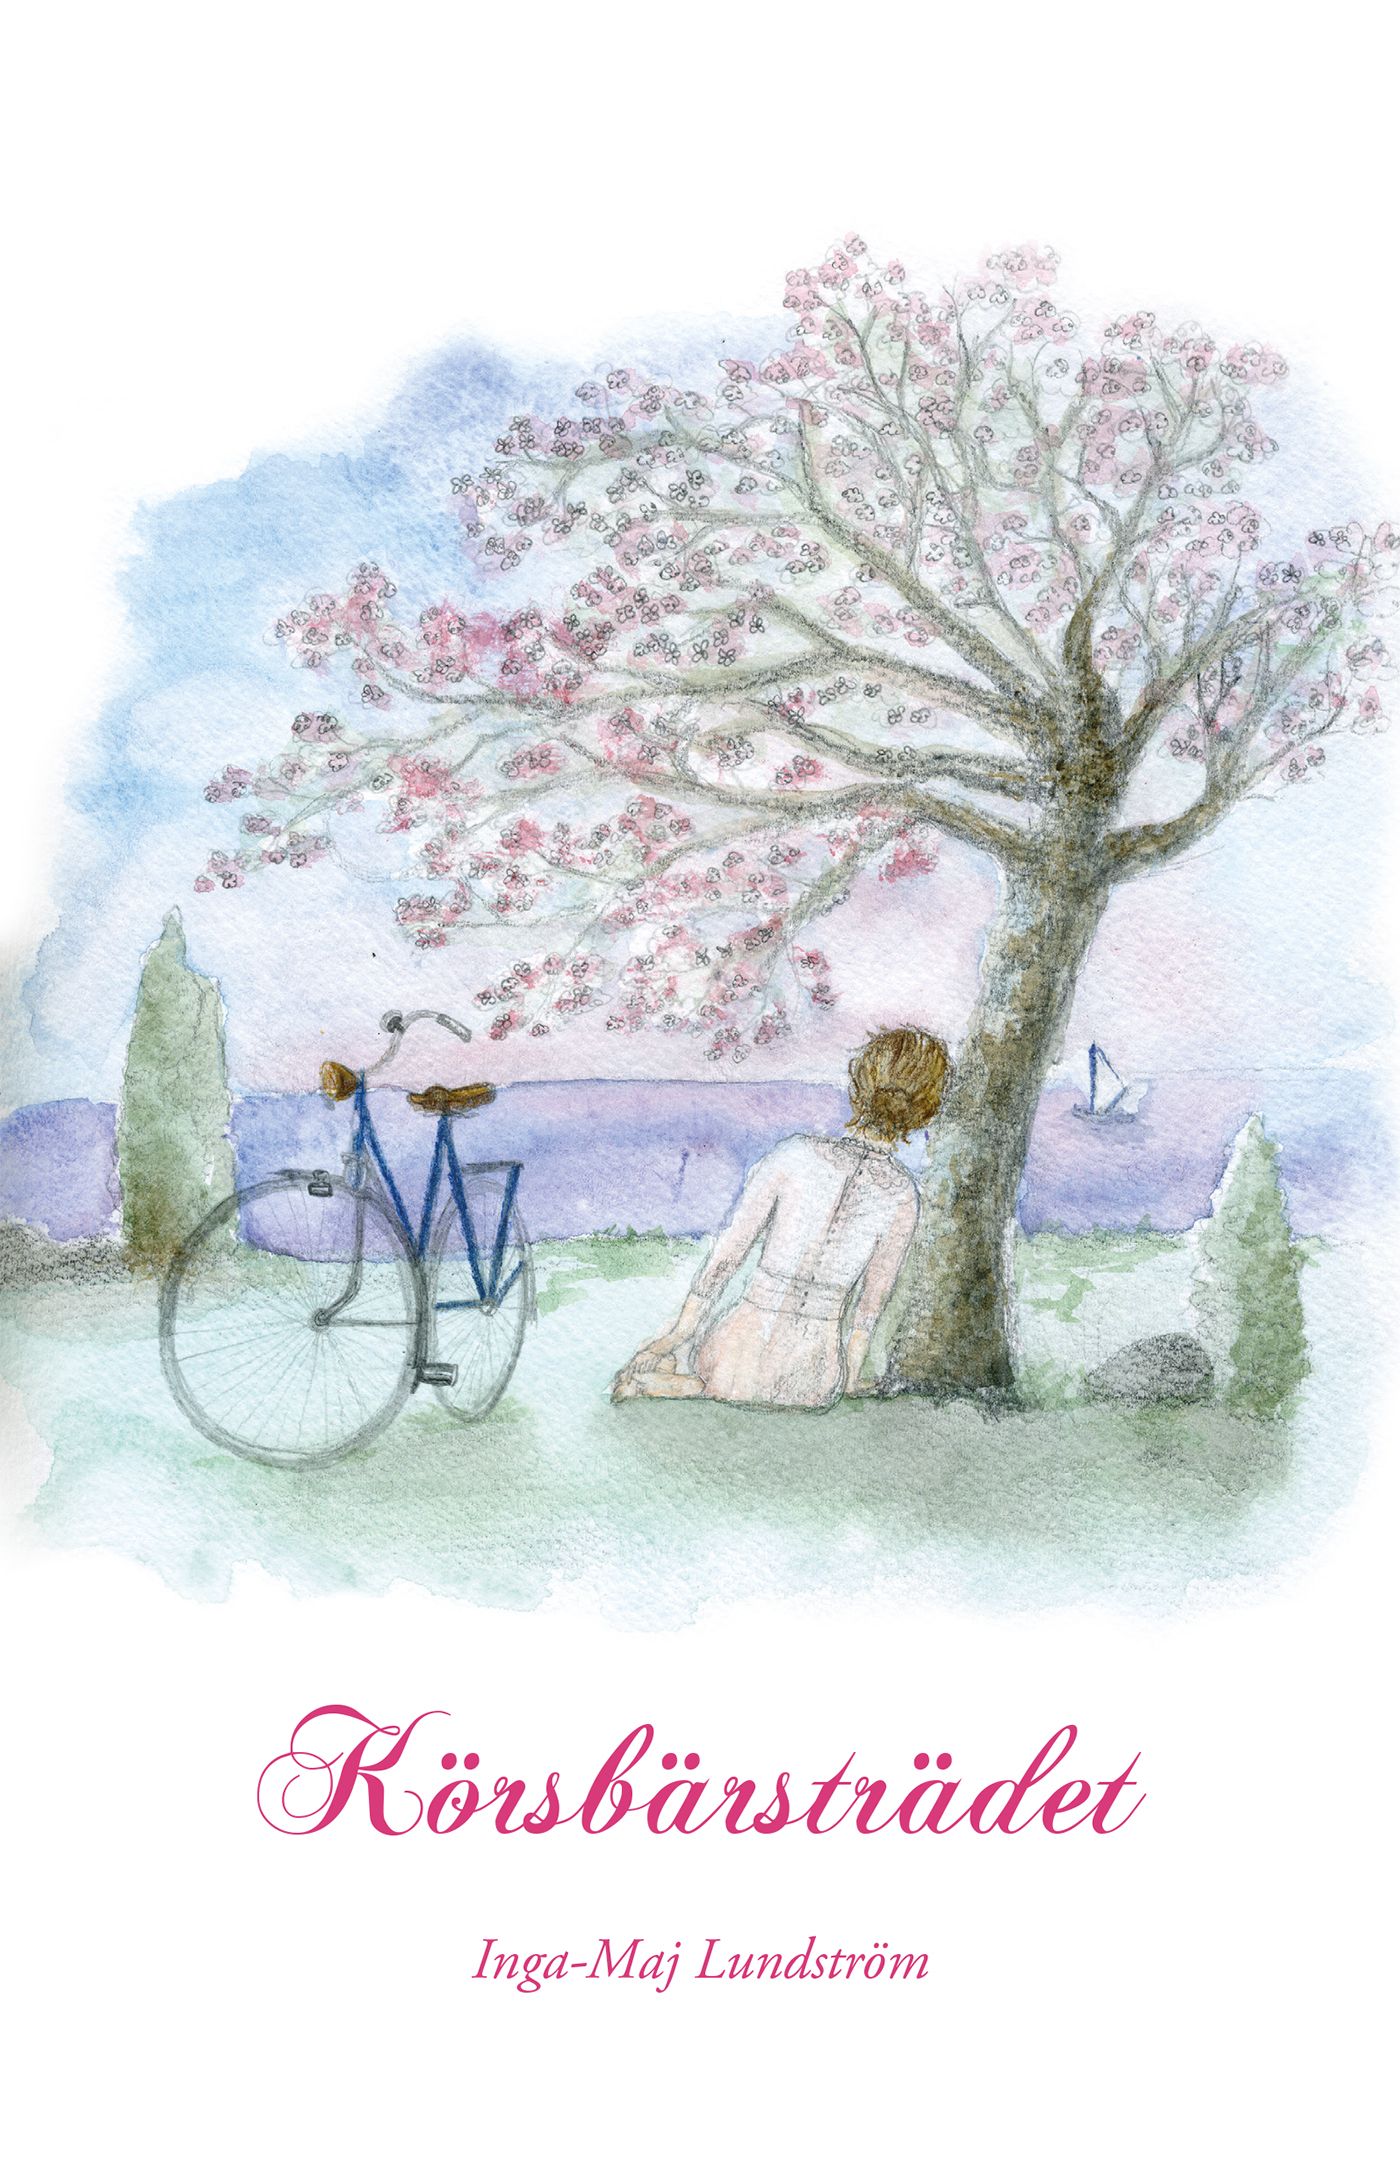 Körsbärsträdet, e-bog af Inga-Maj Lundström